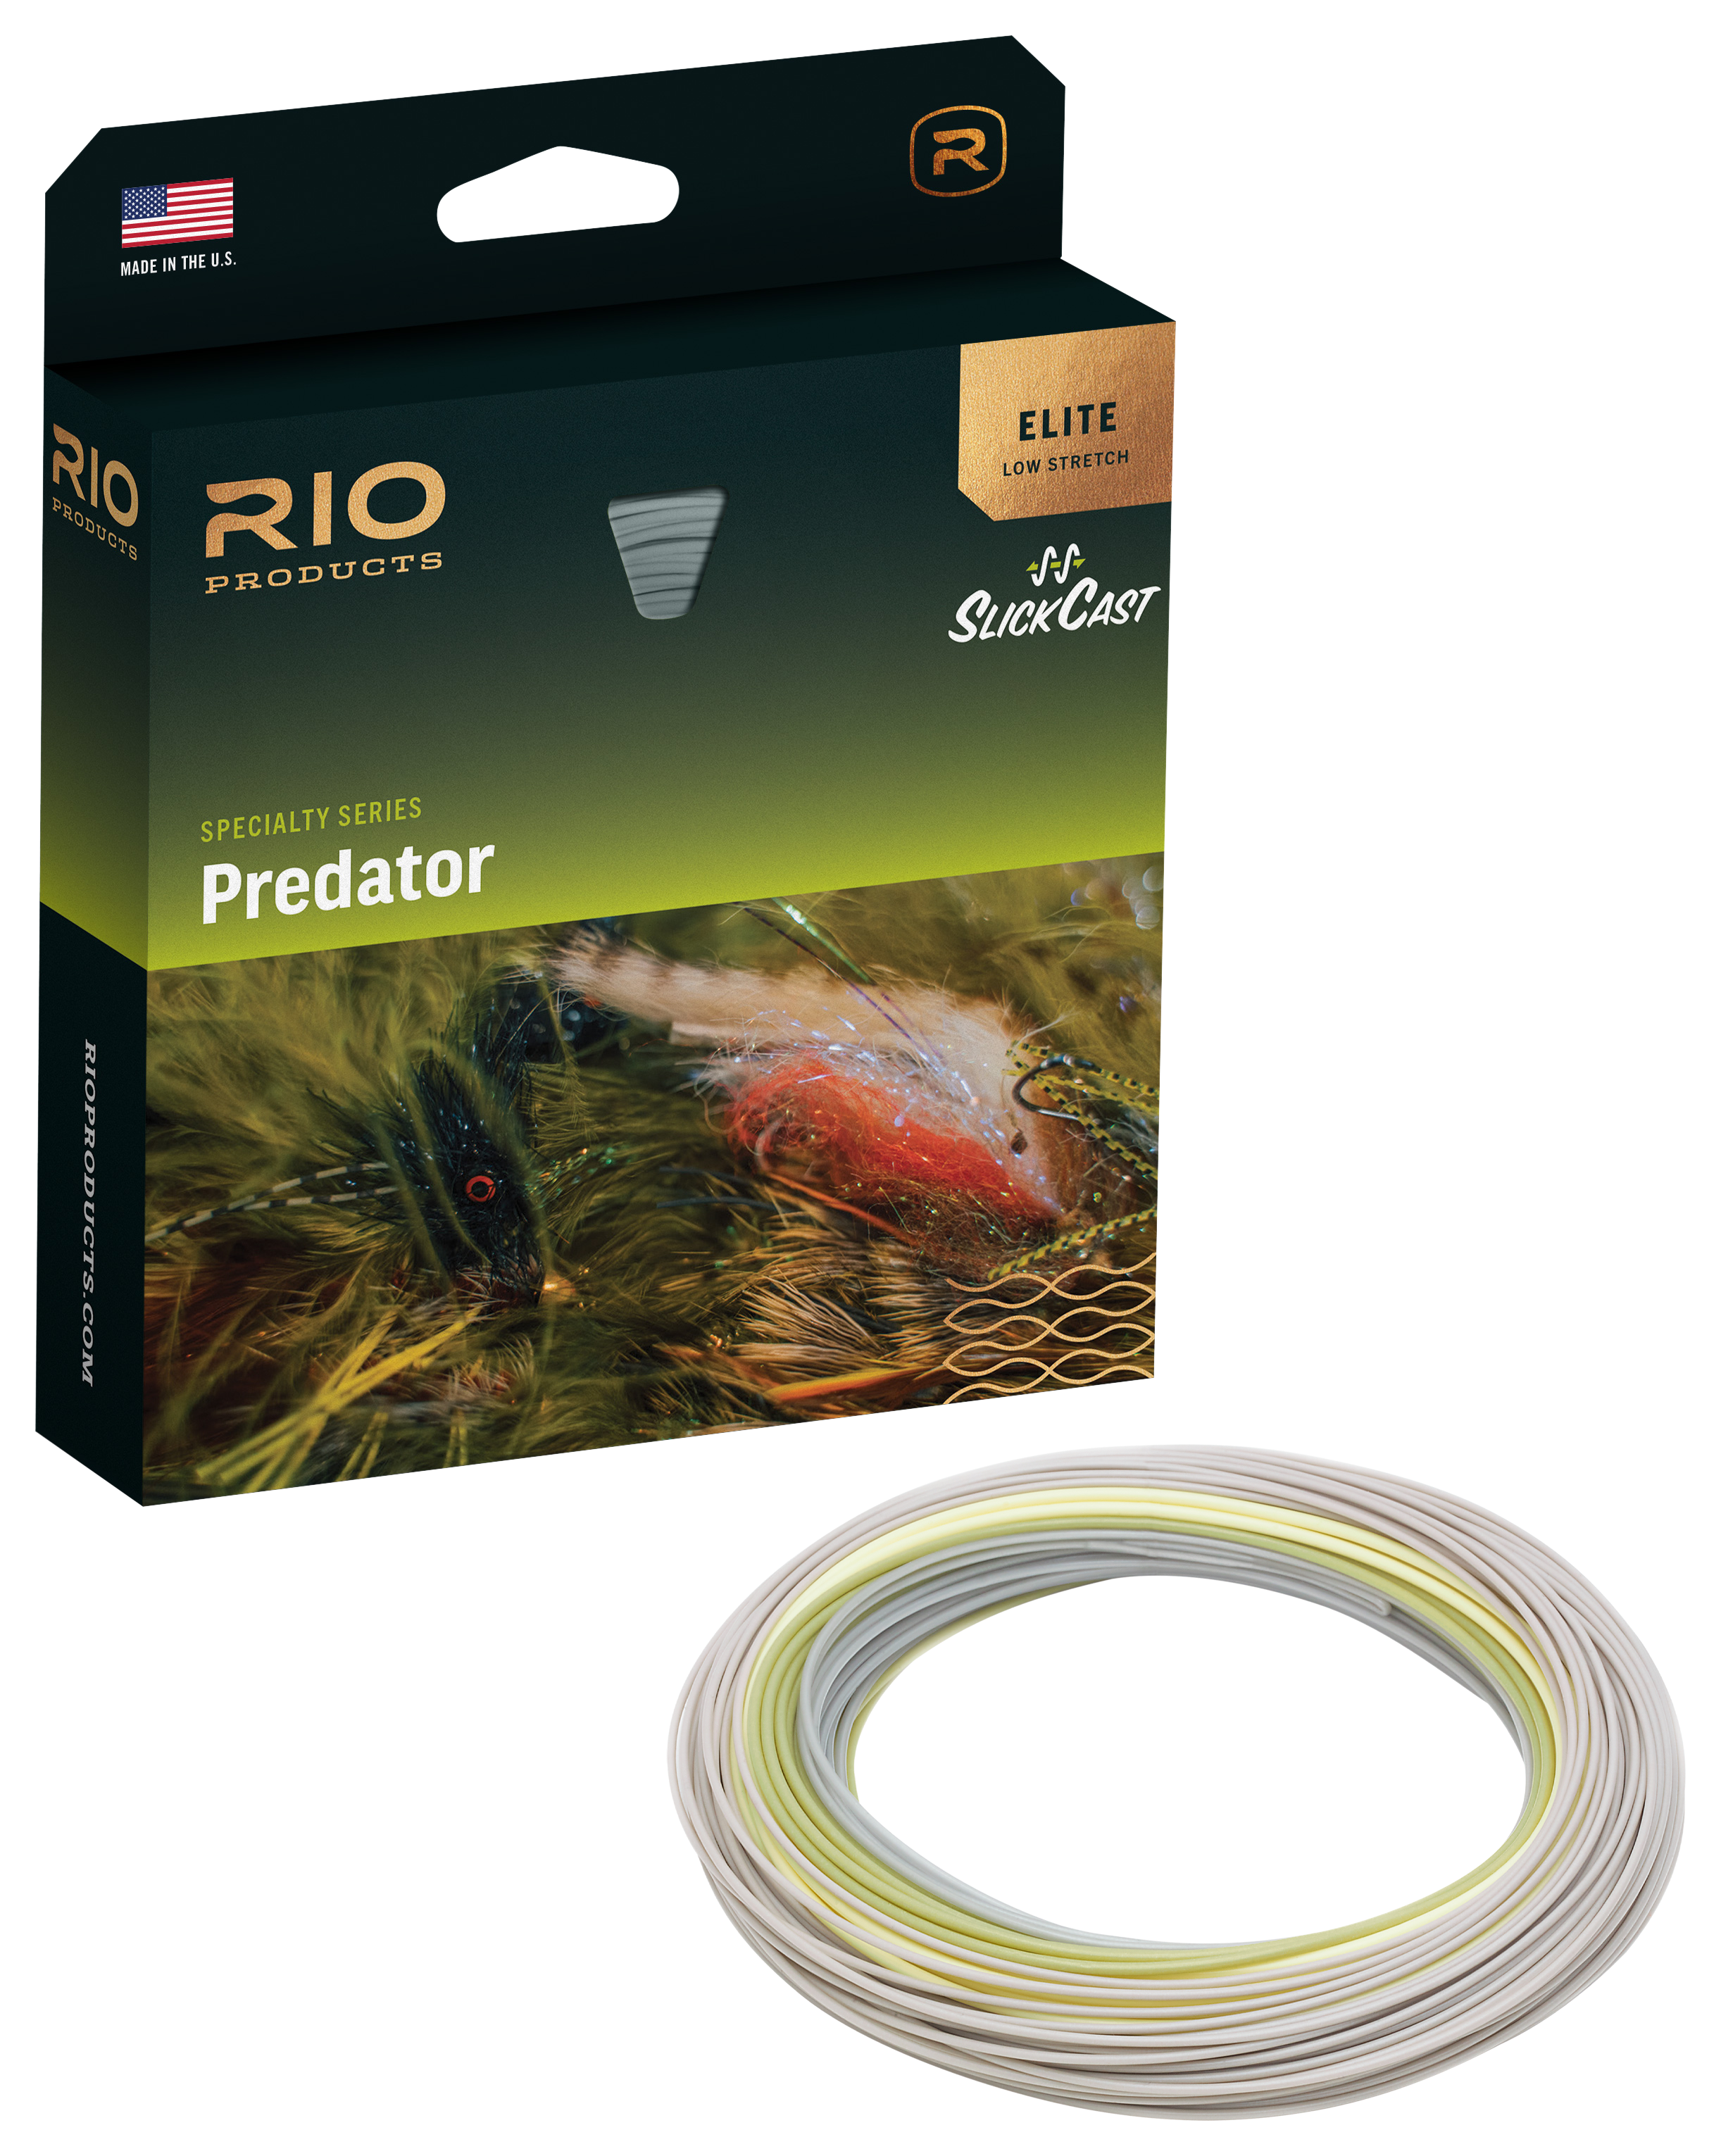 RIO Elite Predator Fly Line - Gray/Camo/Yellow/Beige - 8